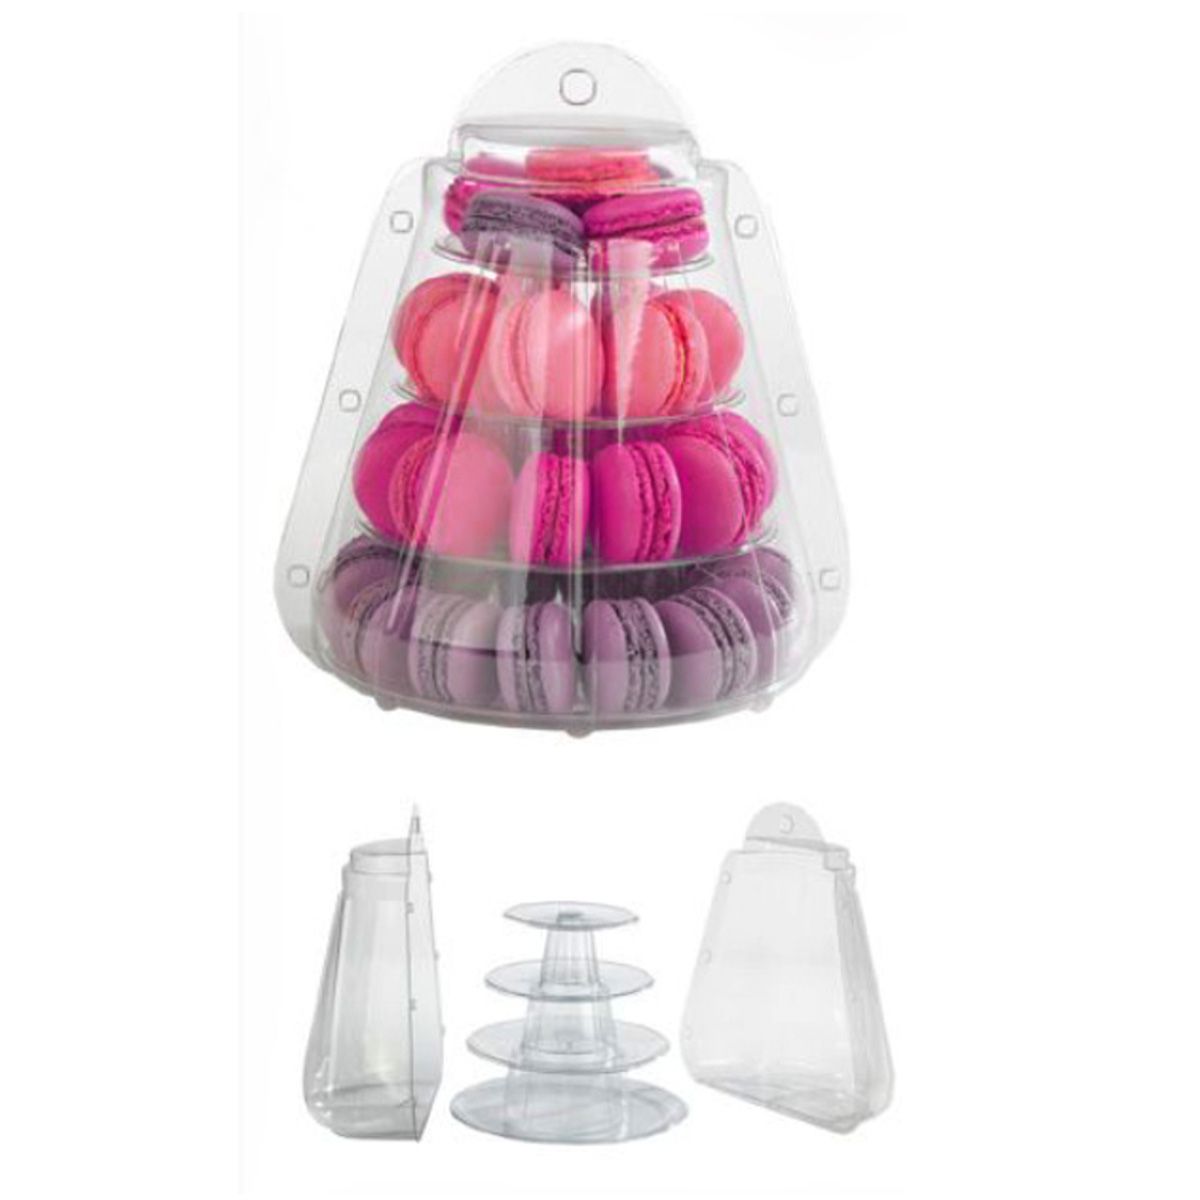 4-Tiers-Mini-Macaron-Tower-Bottles-Display-Stand-Case-Round-Party-Decor-Wedding-Supplies-1351628